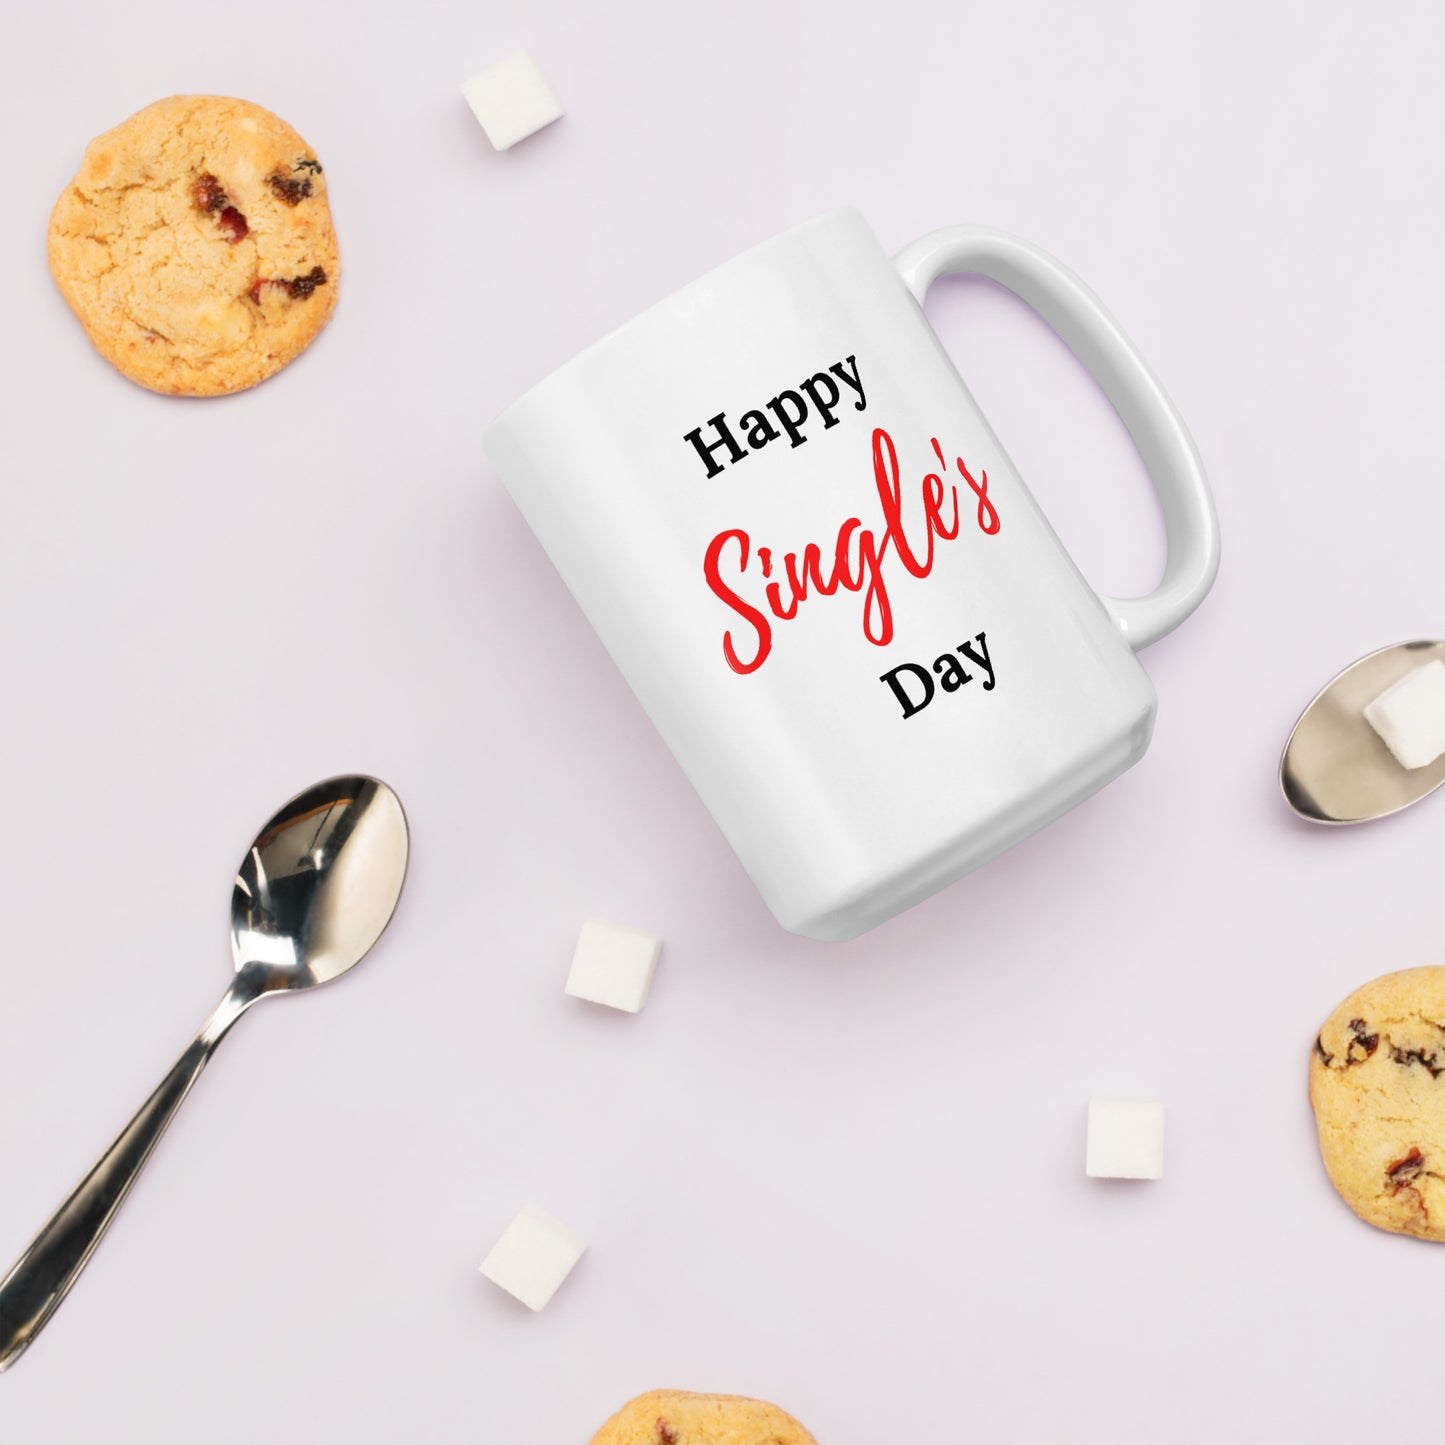 Happy Single's Day Coffee Mug, Single Valentine Mug, Funny Valentine Saying, Funny Valentine Gift, Anti Valentine's Day, Anti Valentine Gift